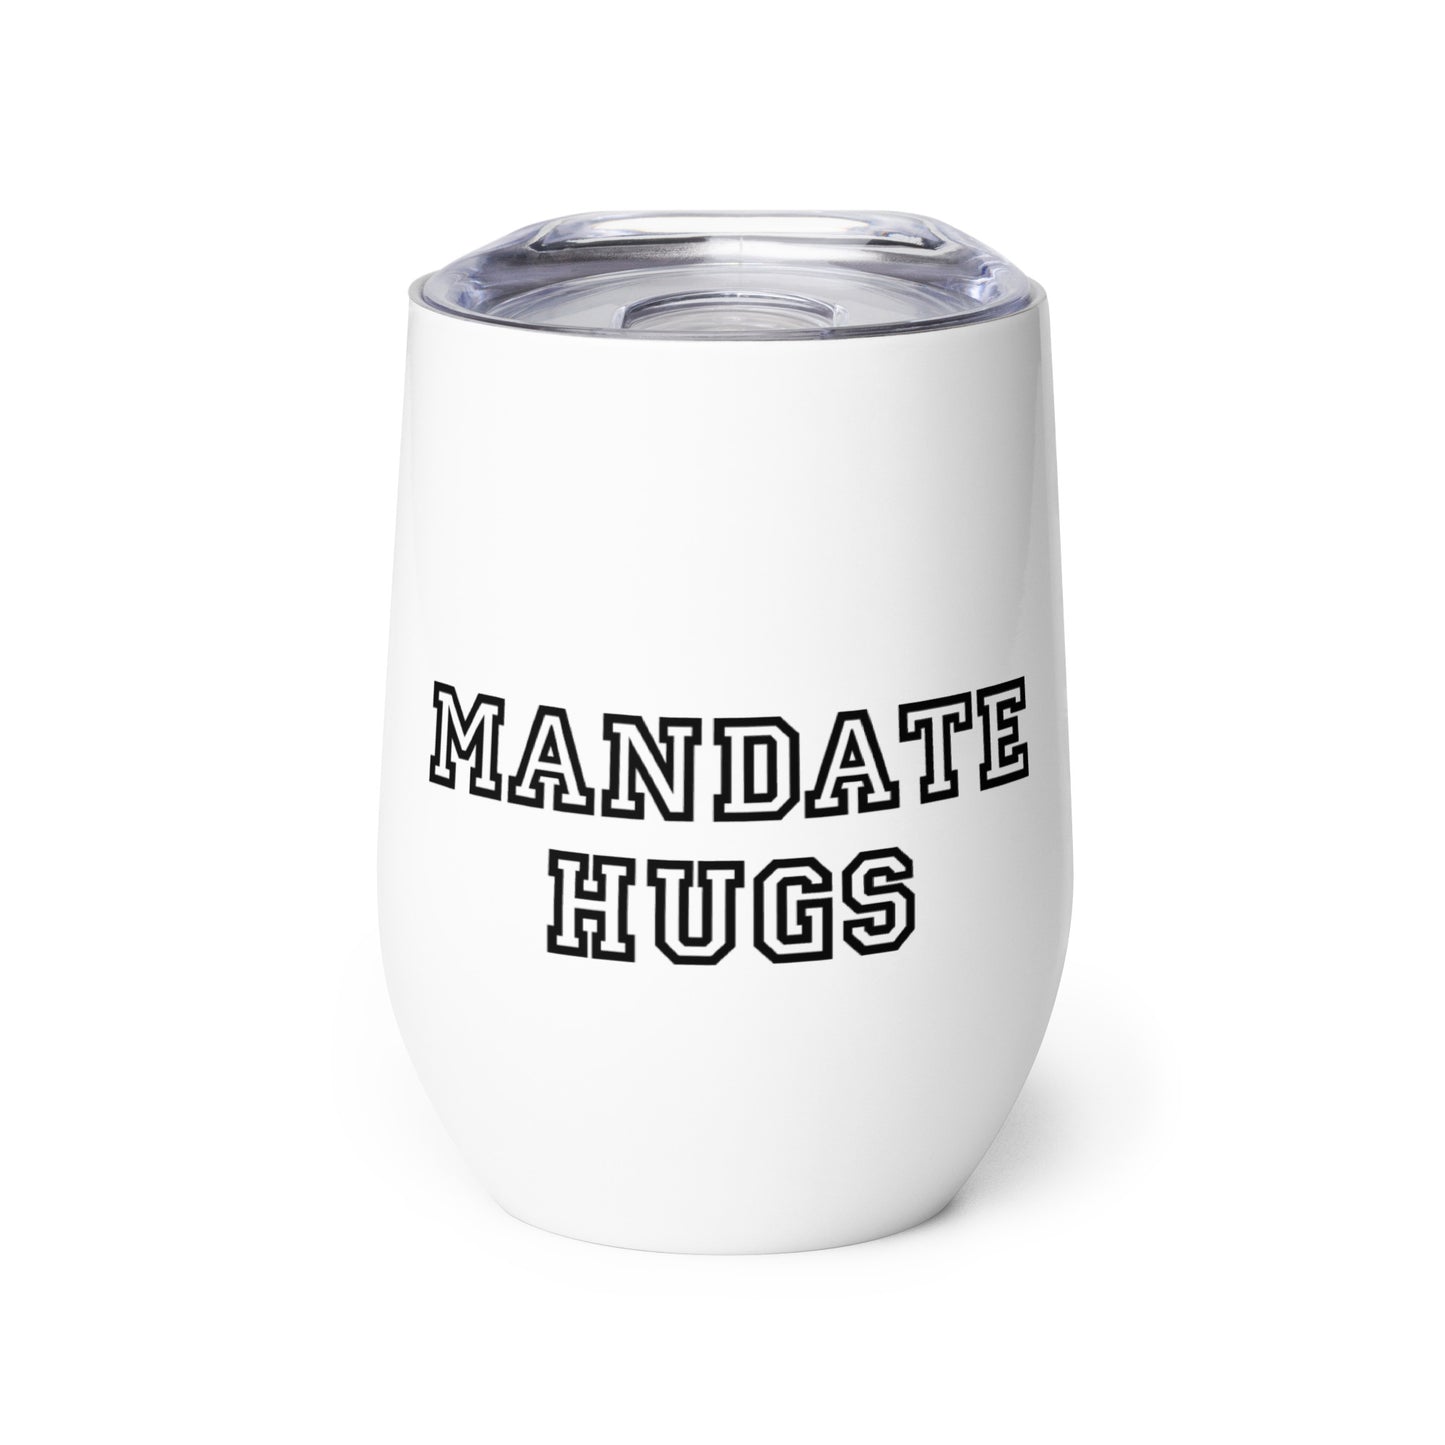 Mandate Hugs Wine Tumbler